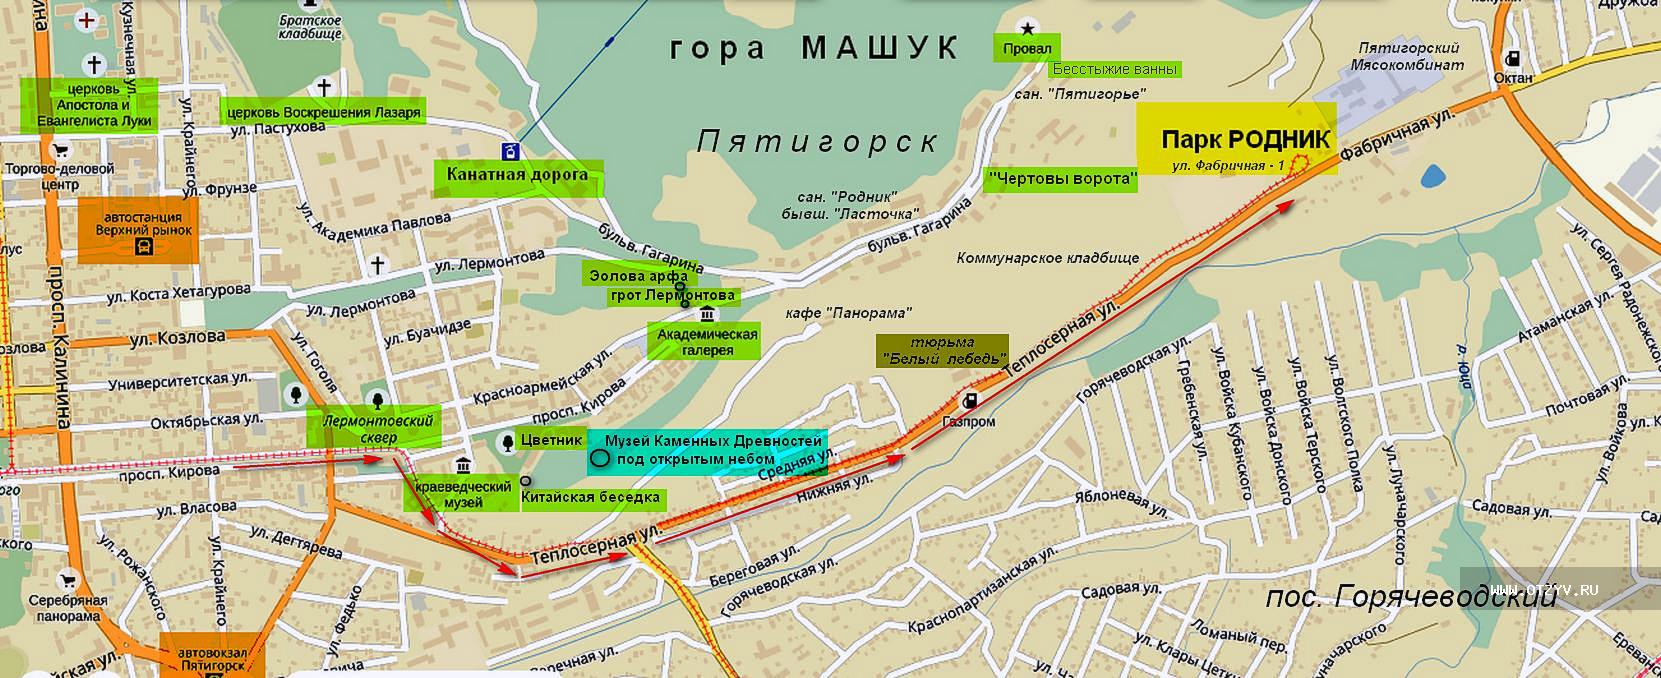 Карта Пятигорска с санаториями и улицами ЖД вокзал